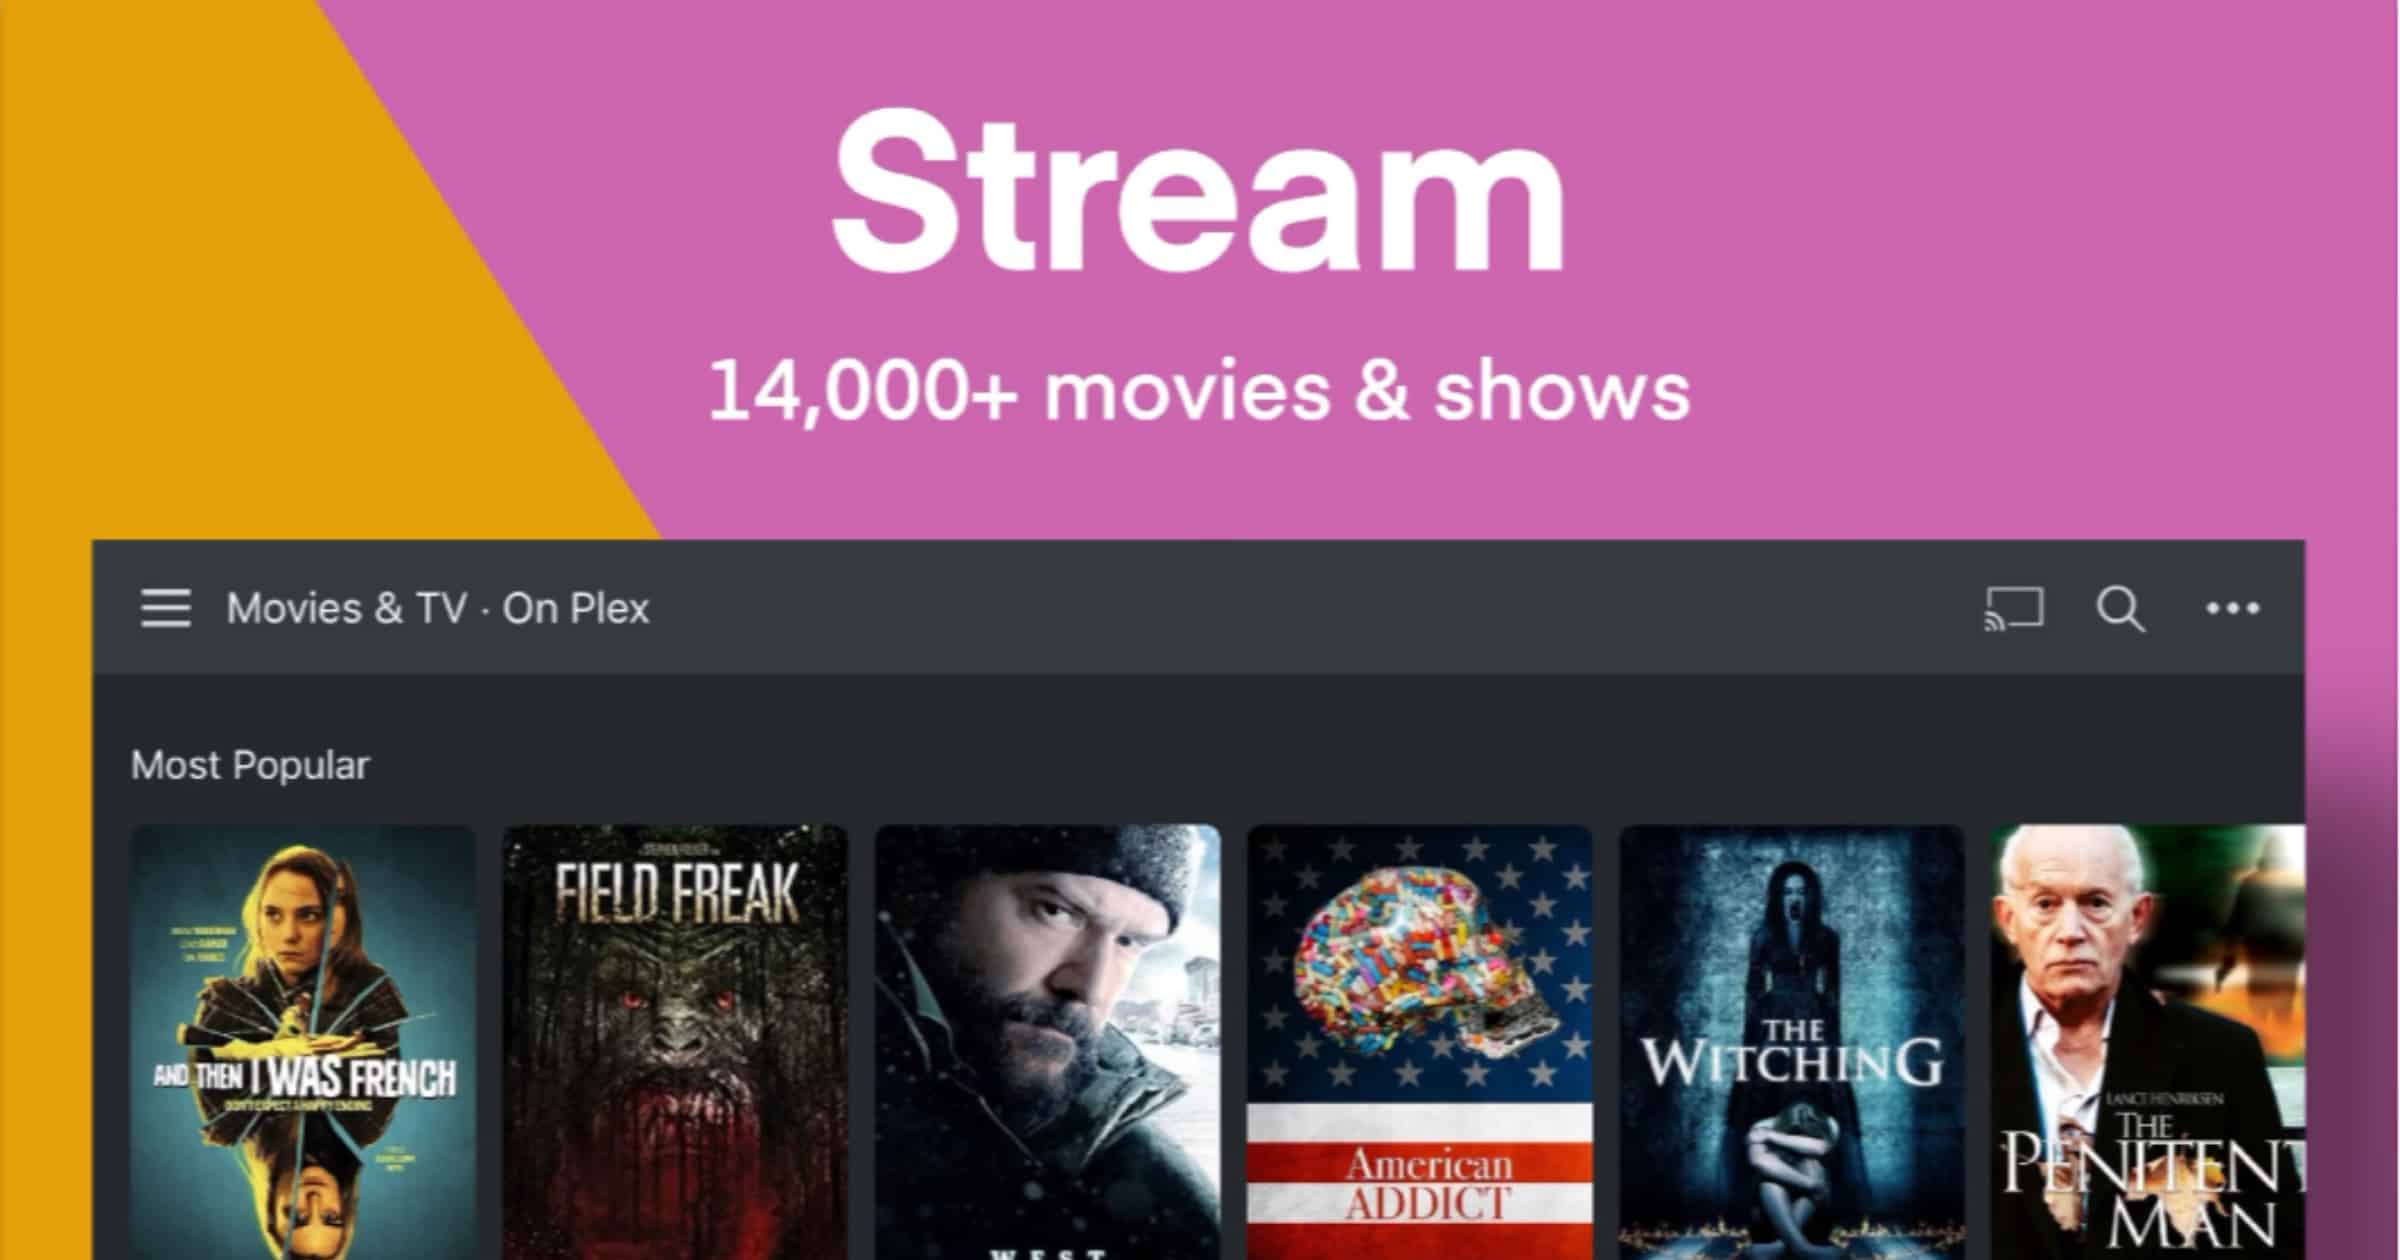 Plex stream movies and shows